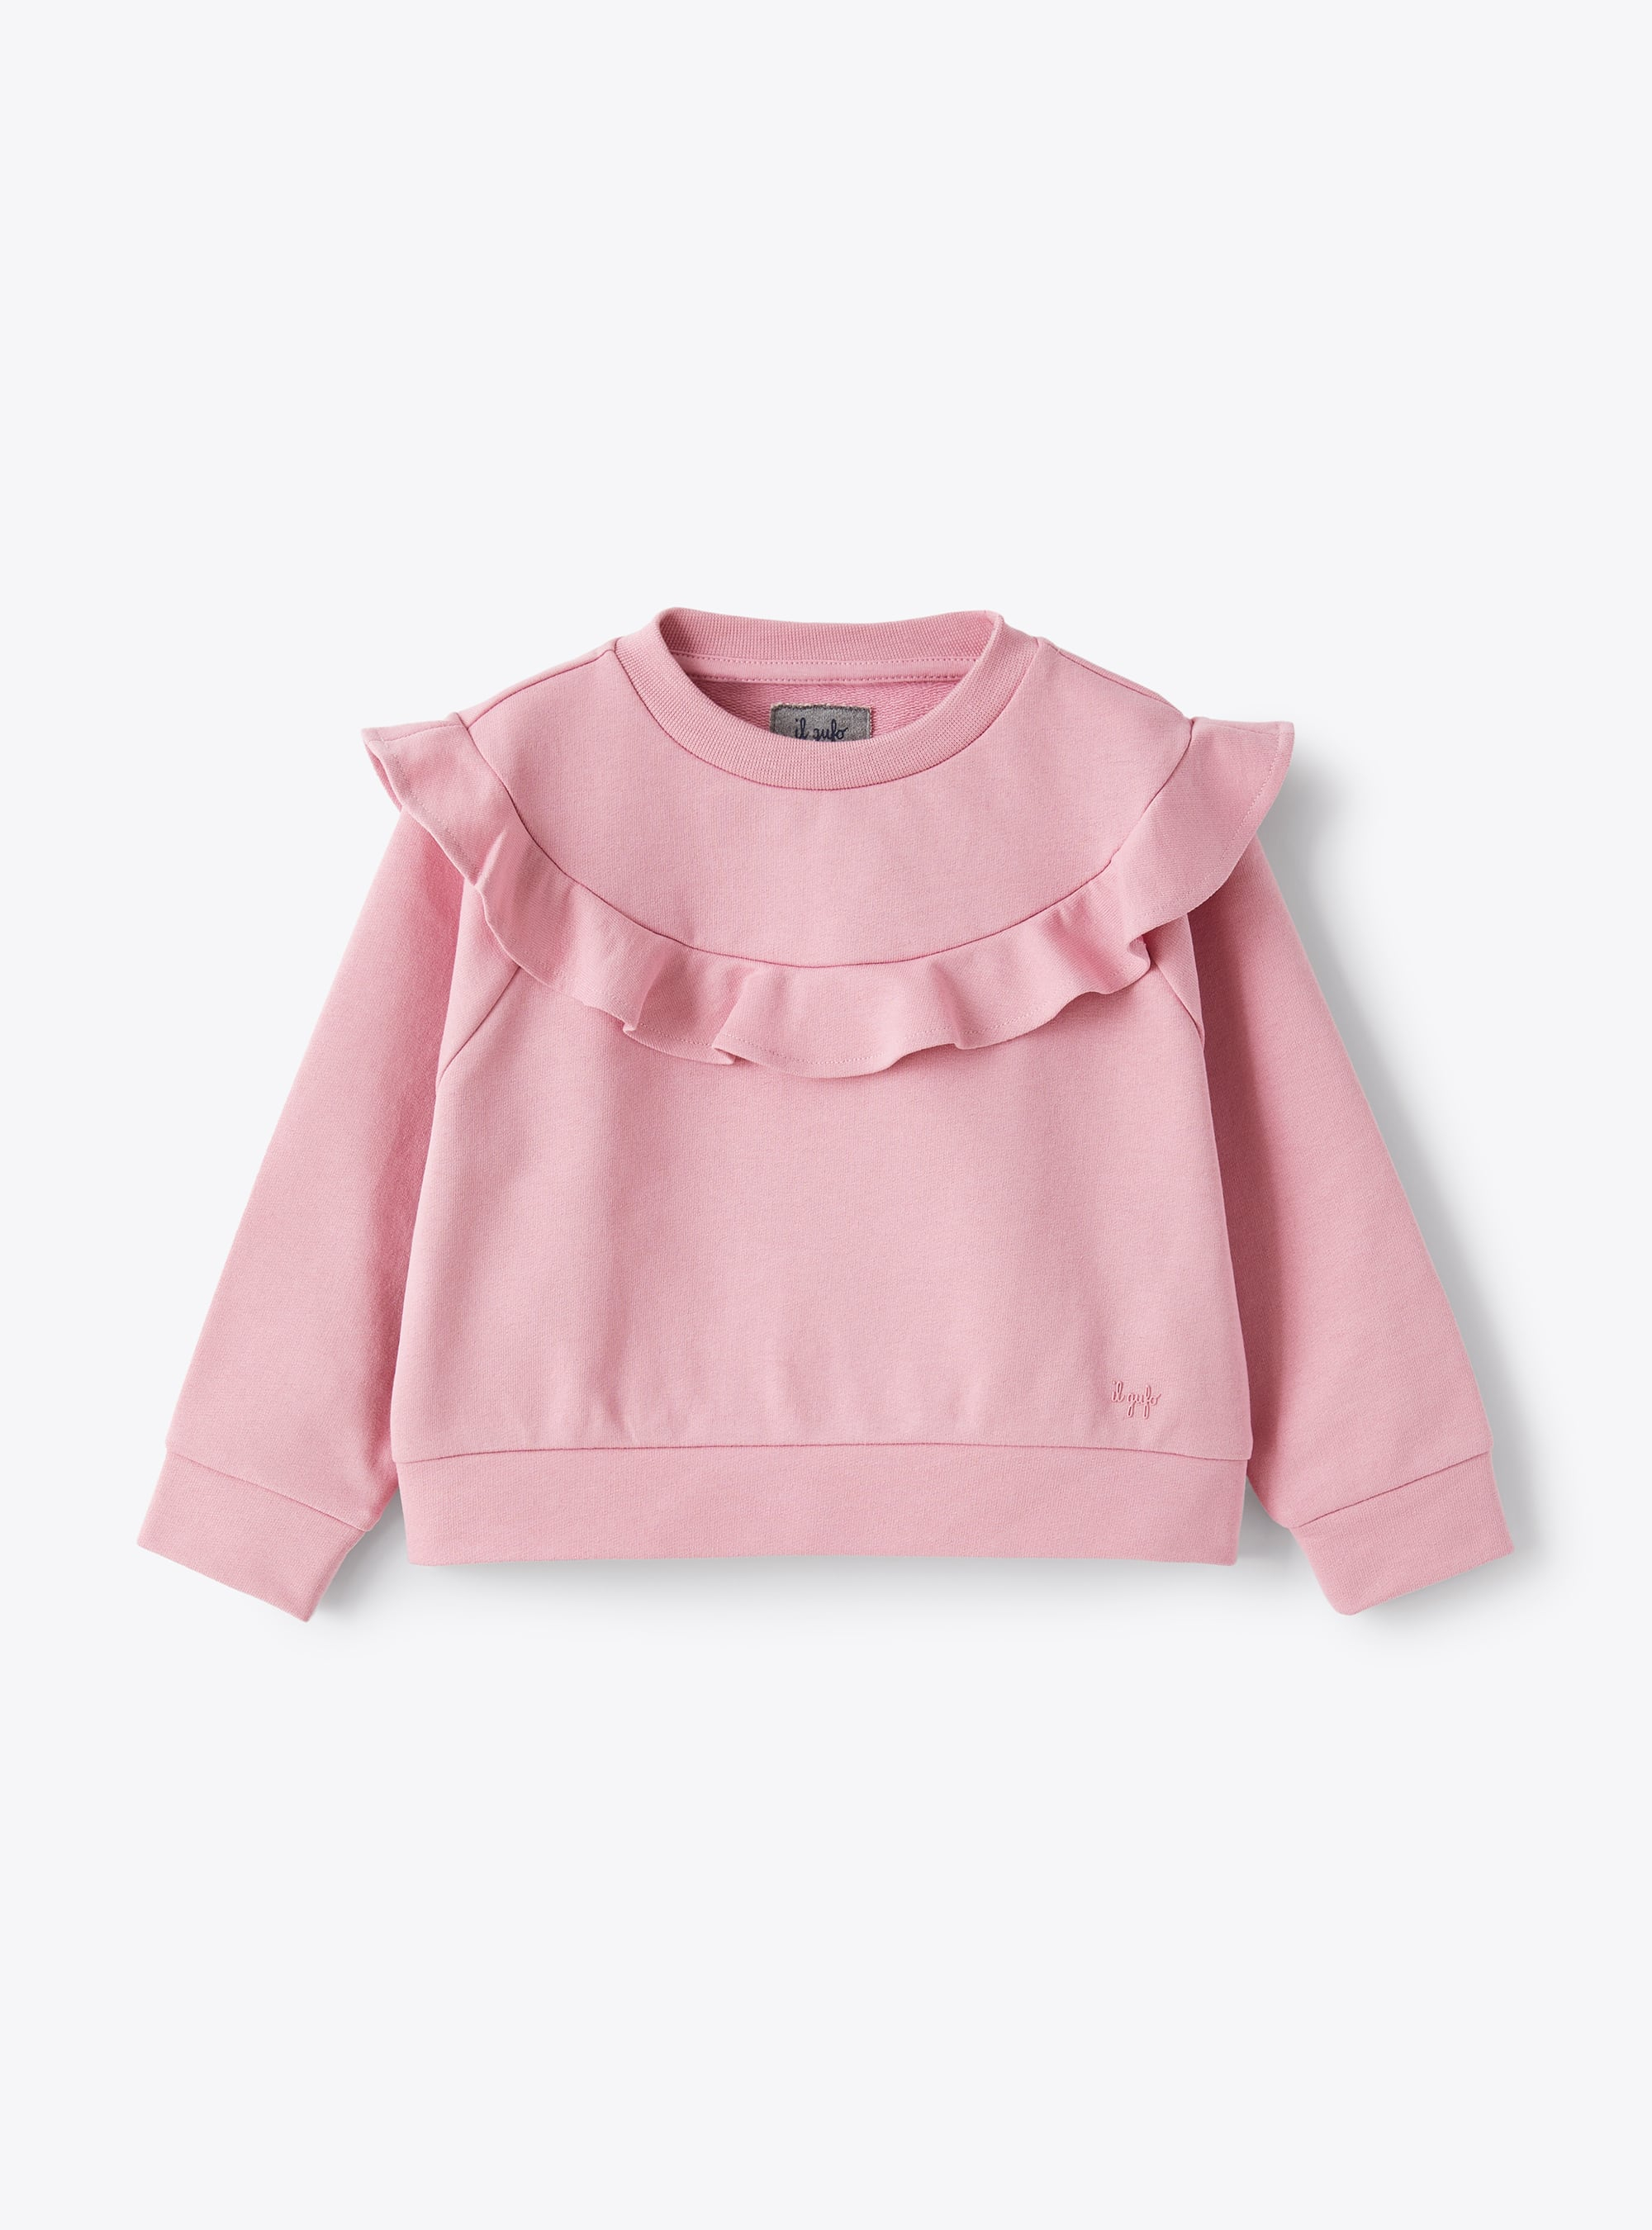 Sweatshirt in pink cotton with ruffle - Sweatshirts - Il Gufo